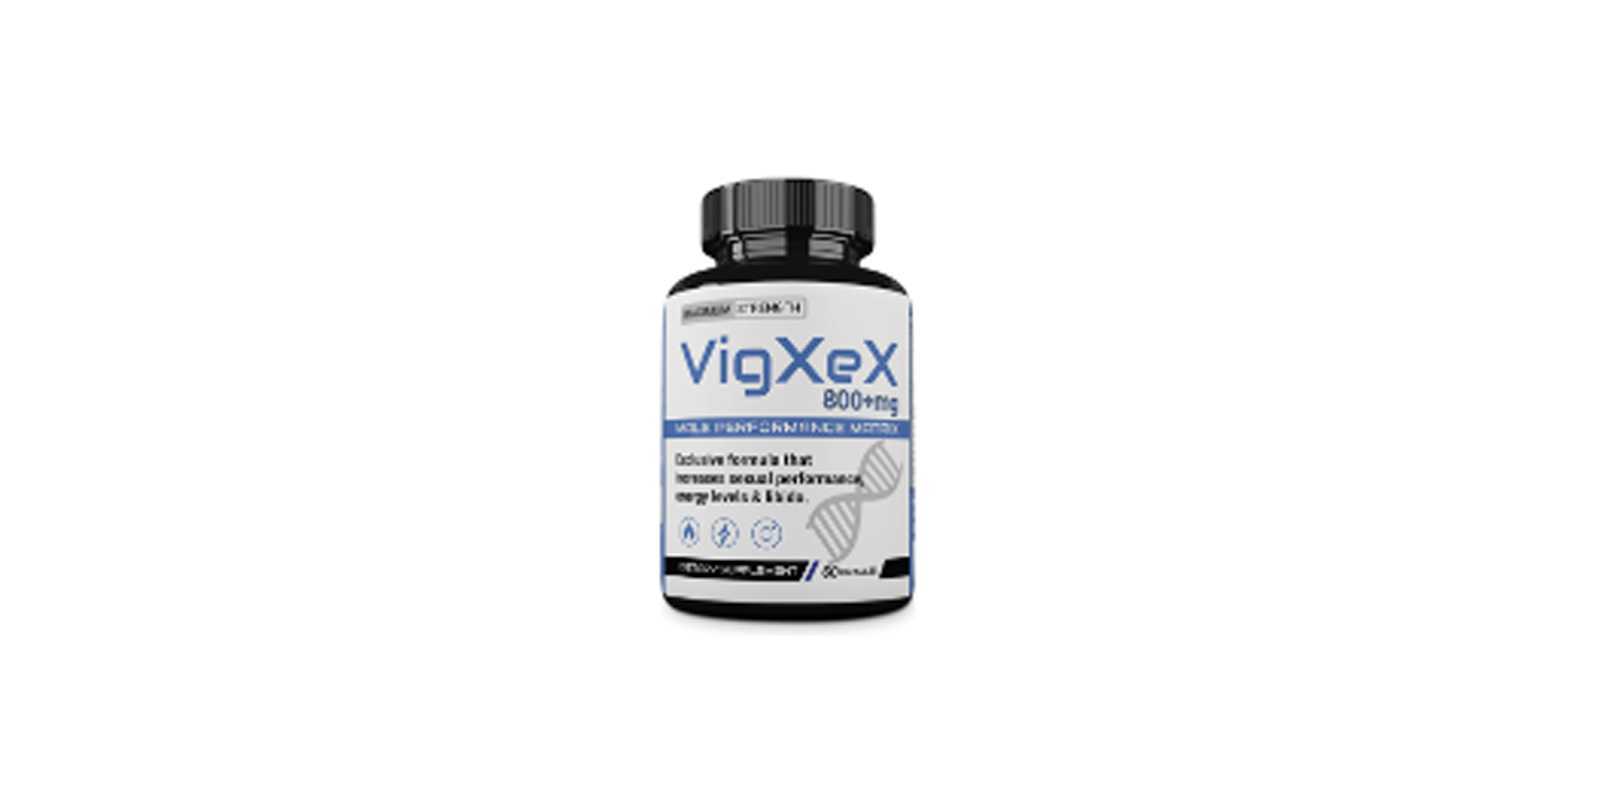 VigXeX Review